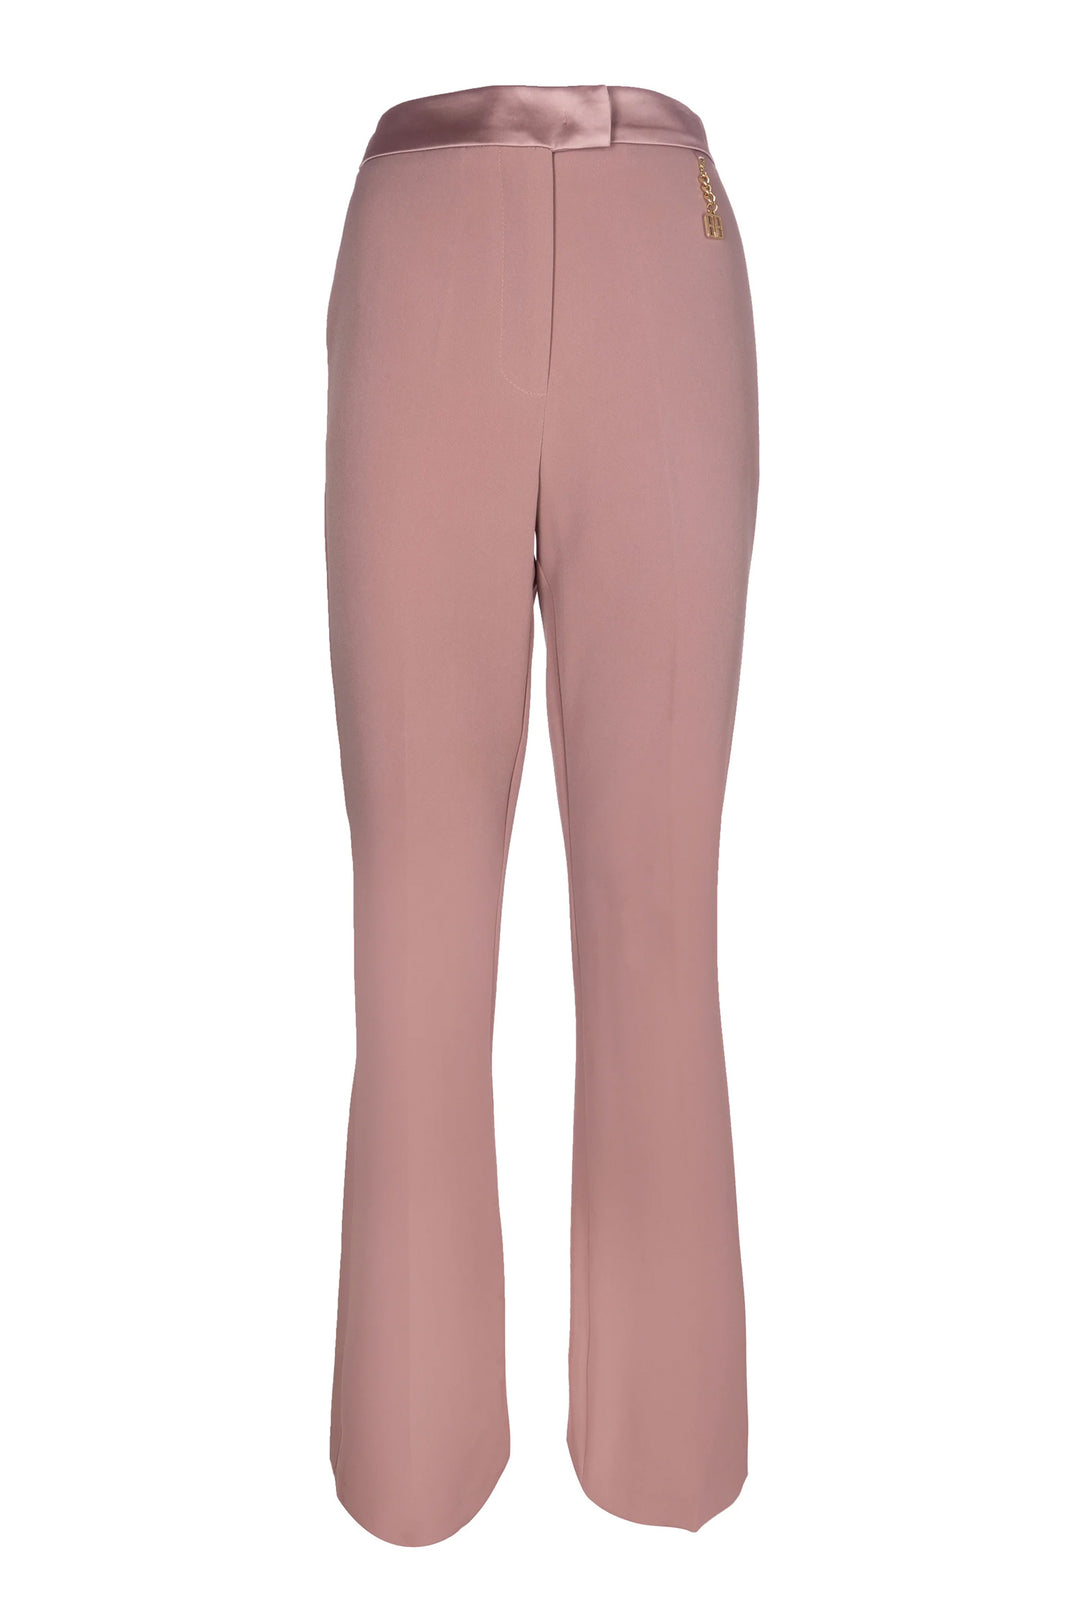 FRACOMINA Pantalone bootcut rosa antico in tessuto tecnico - Mancinelli 1954